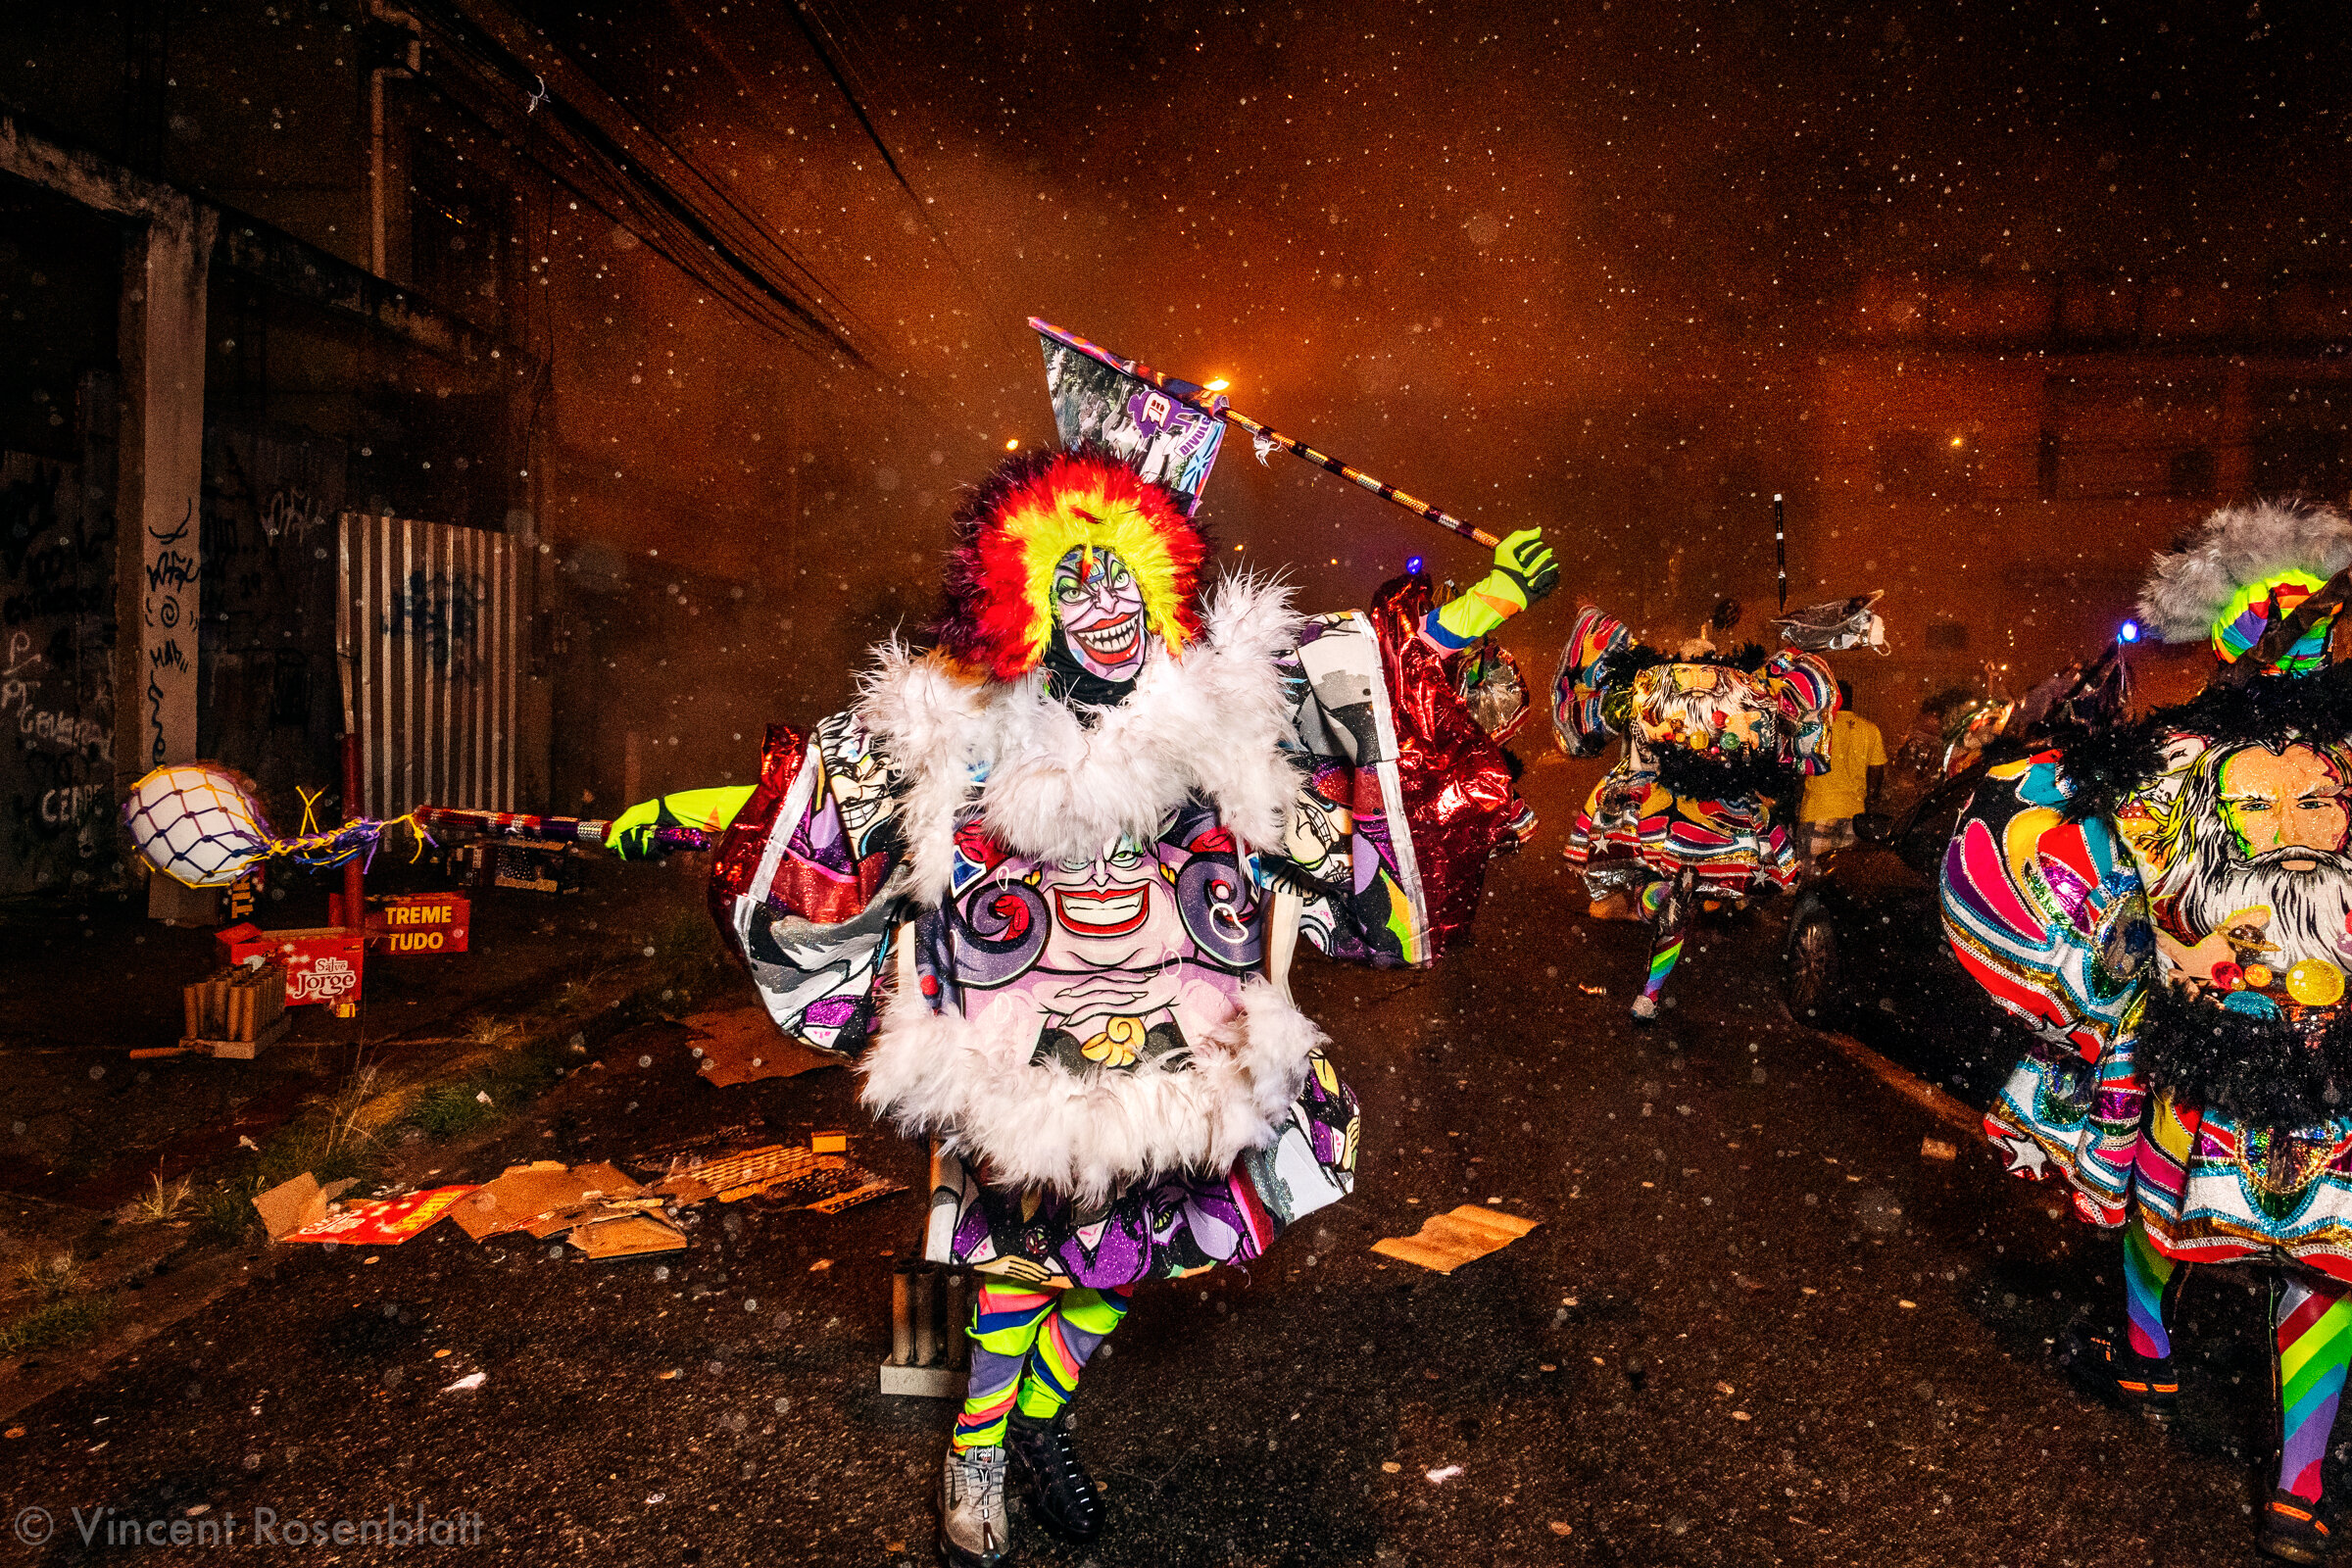  Show of the bate-bola groups Truque de Mestre (Master Trick) and Turbulencia (Turbulence) in the Urubu favela, North Zone of Rio de Janeiro, Carnival 2020. 